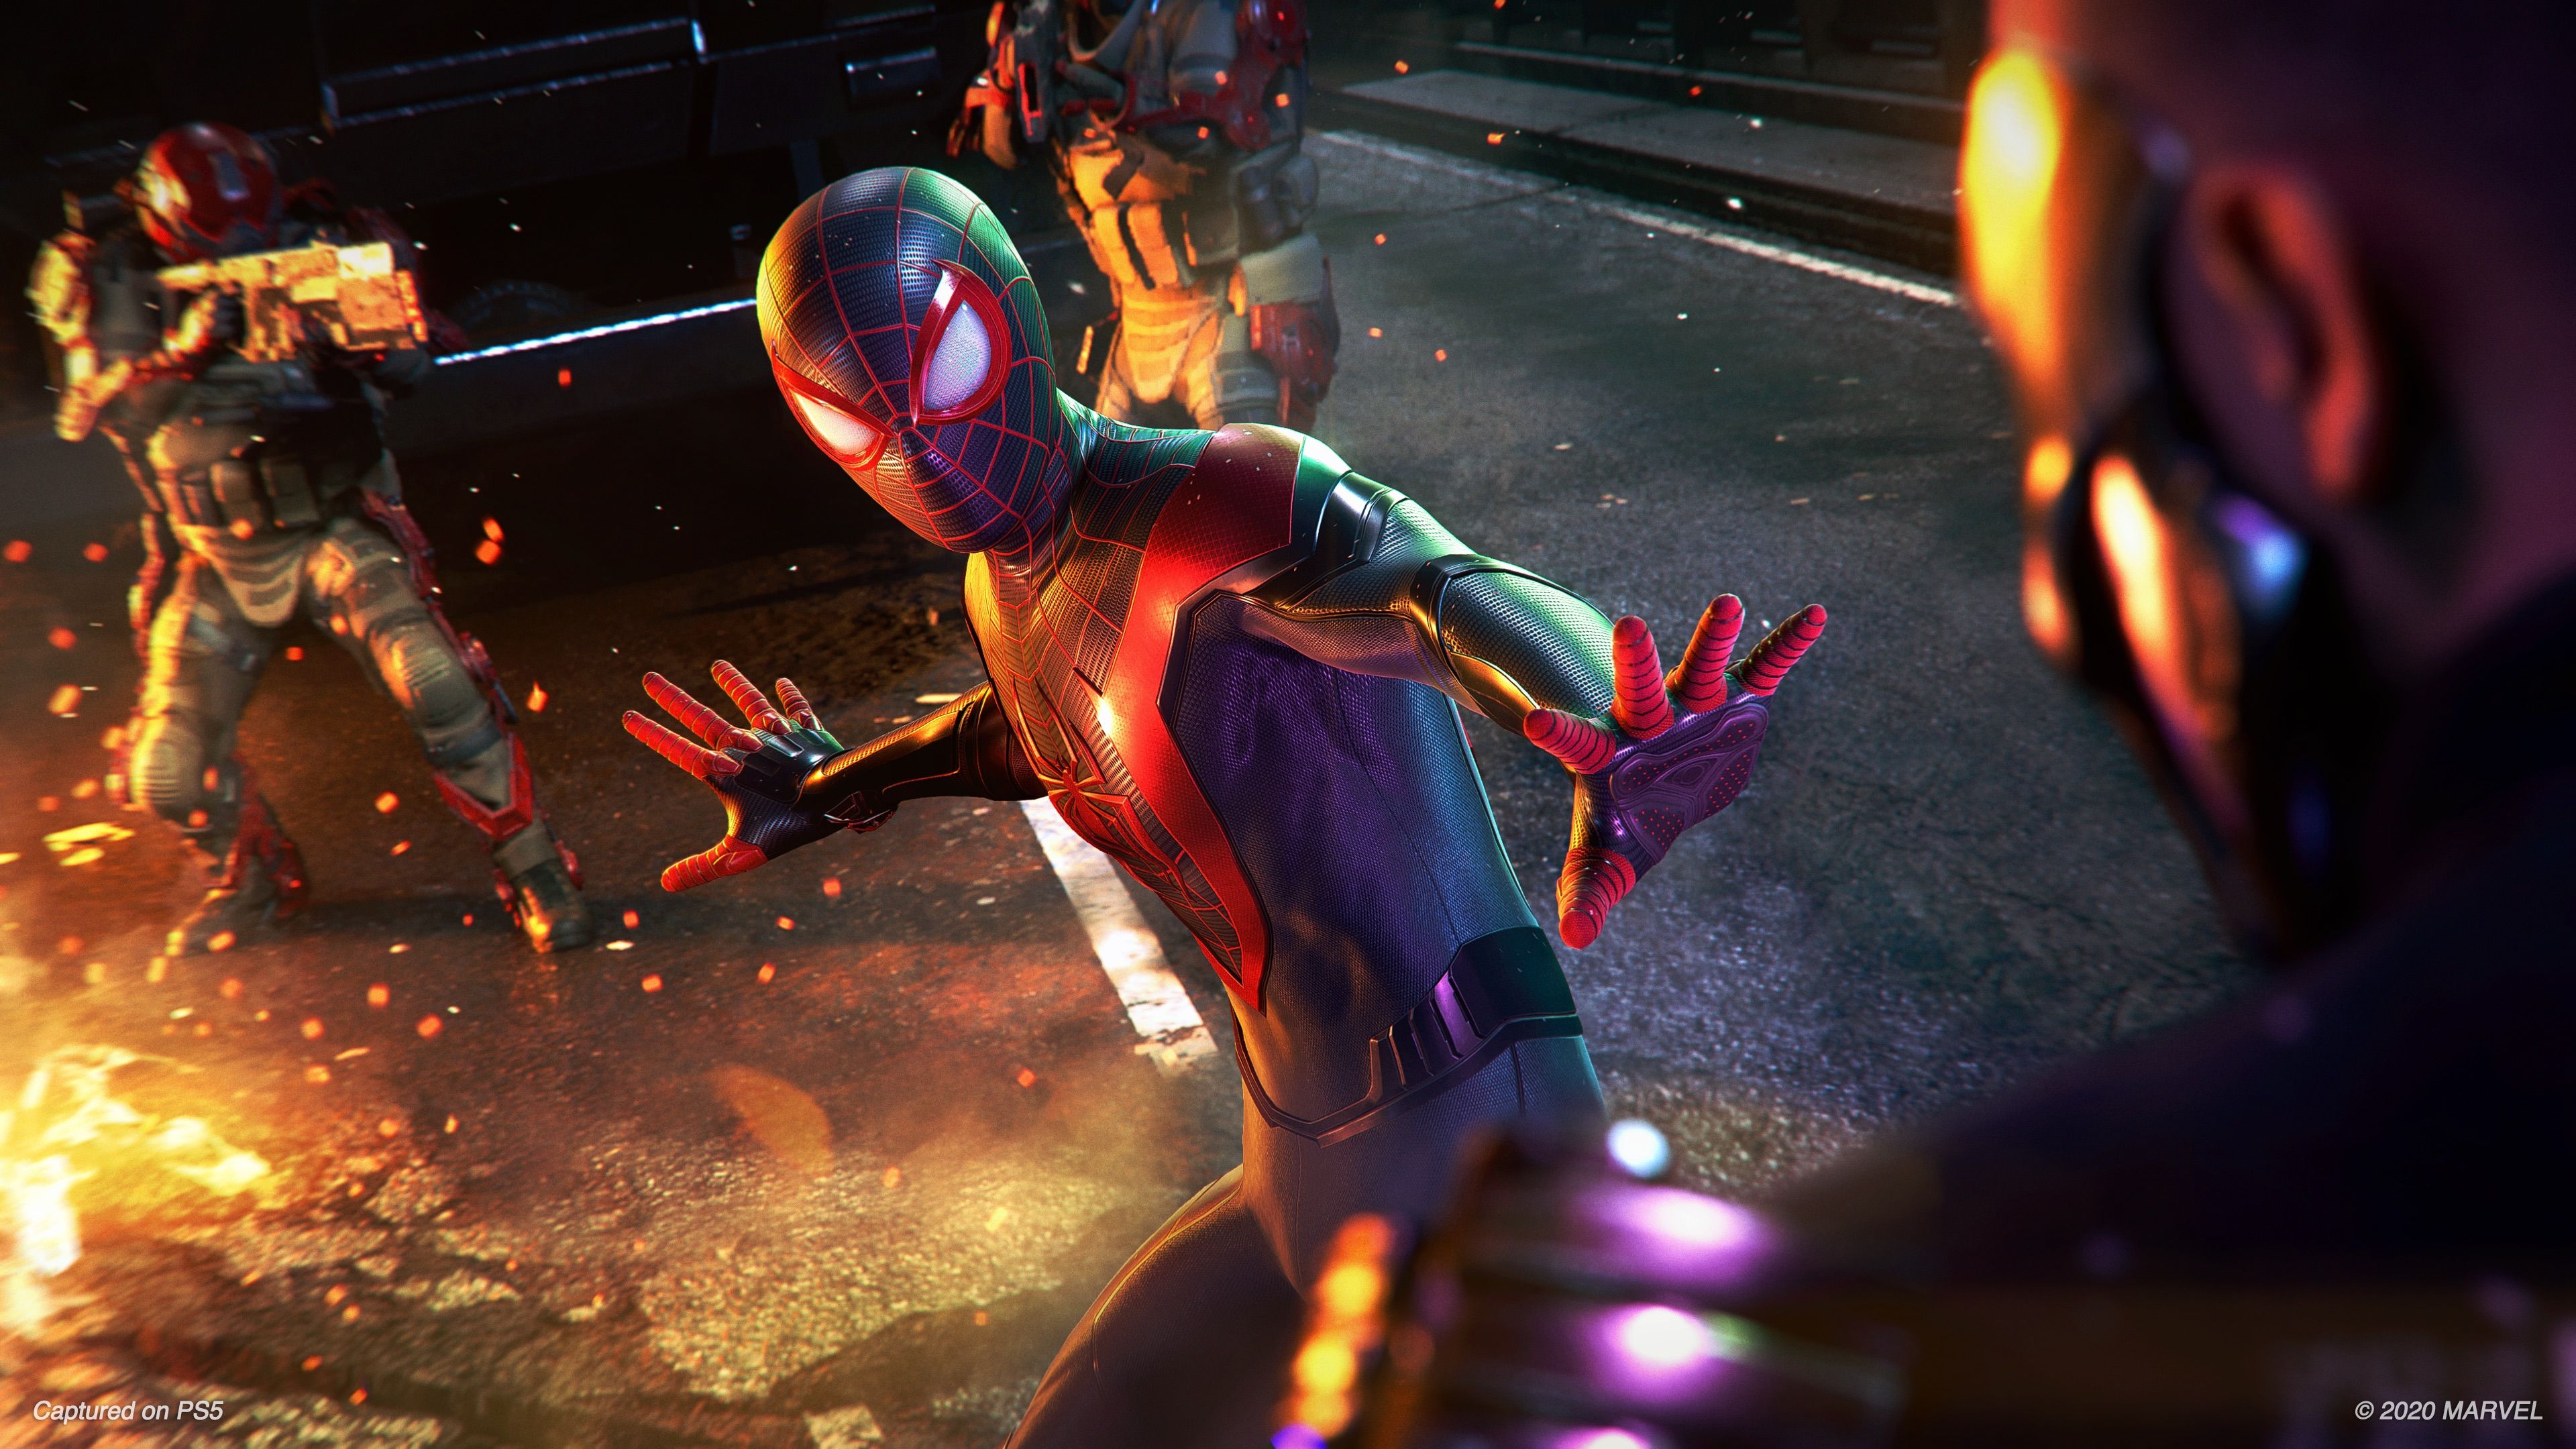 Marvel's Spider-Man Miles Morales PS5